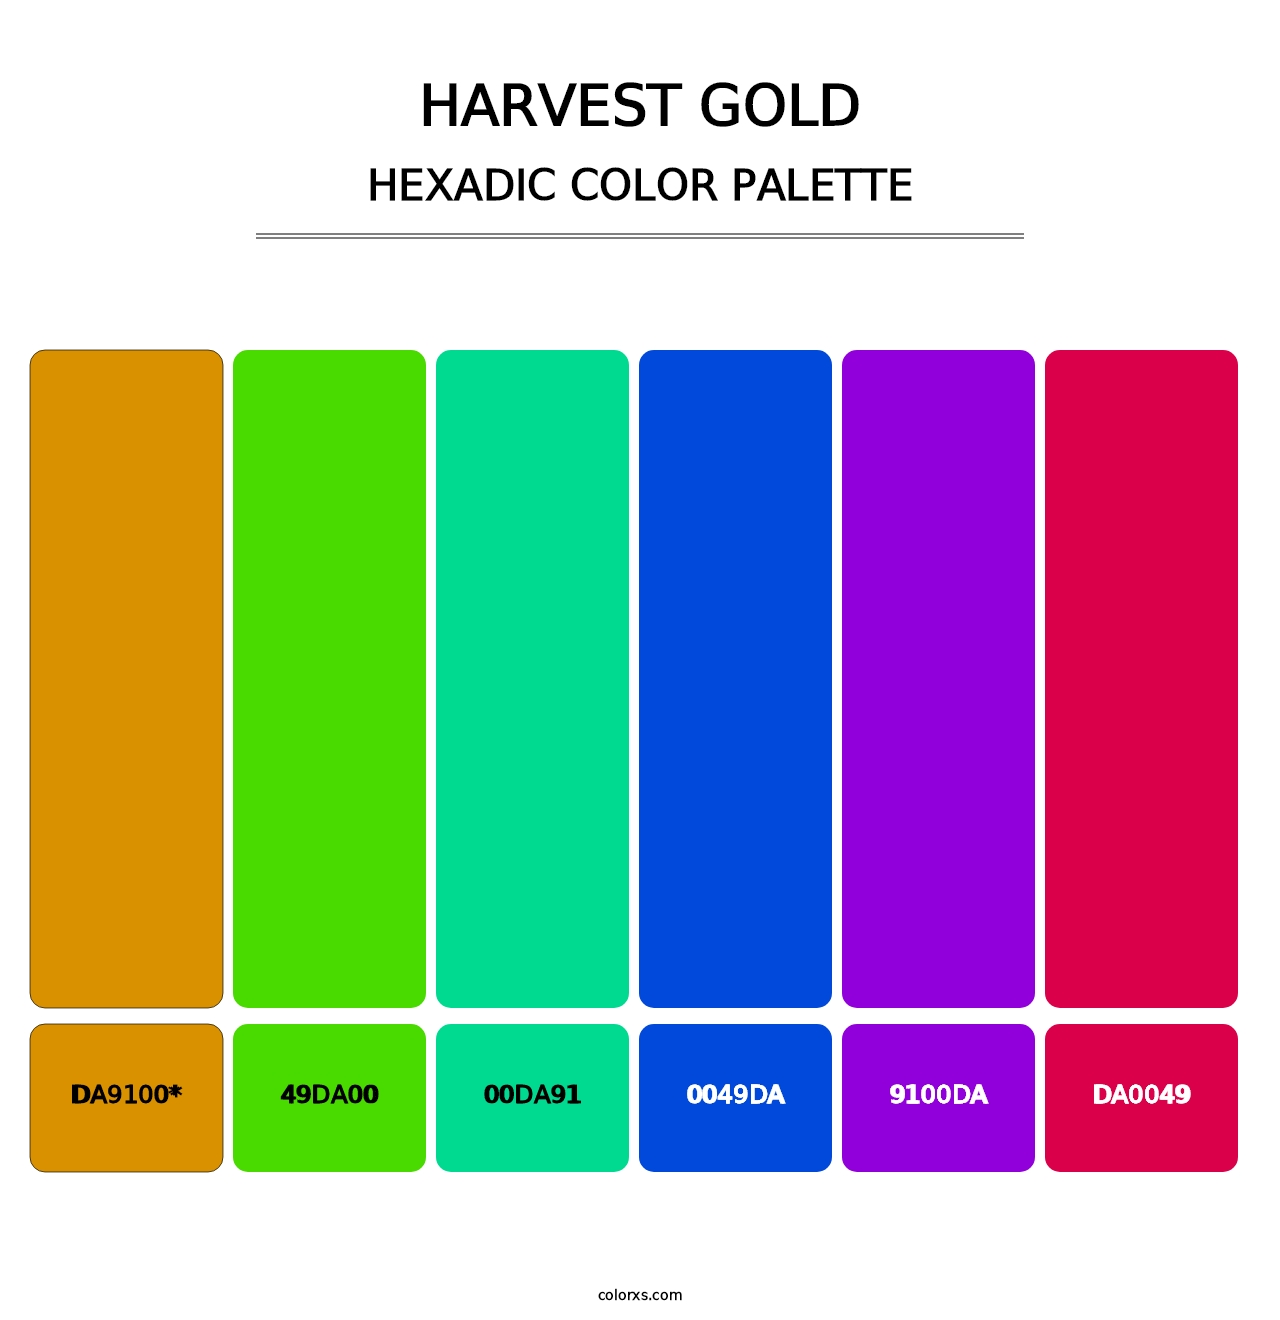 Harvest Gold - Hexadic Color Palette